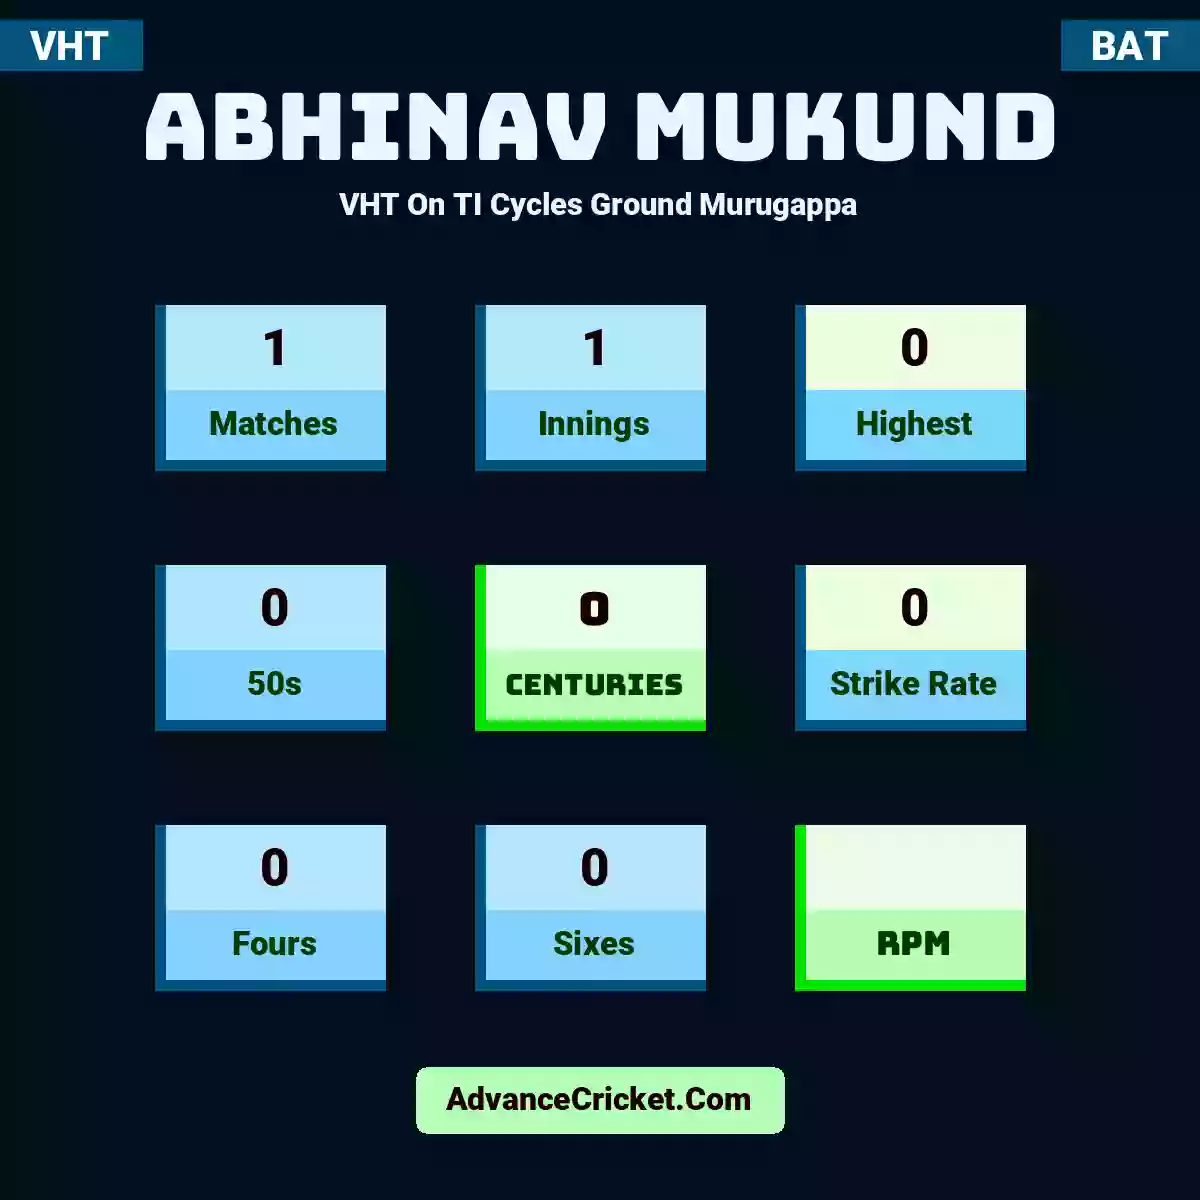 Abhinav Mukund VHT  On TI Cycles Ground Murugappa, Abhinav Mukund played 1 matches, scored 0 runs as highest, 0 half-centuries, and 0 centuries, with a strike rate of 0. A.Mukund hit 0 fours and 0 sixes.